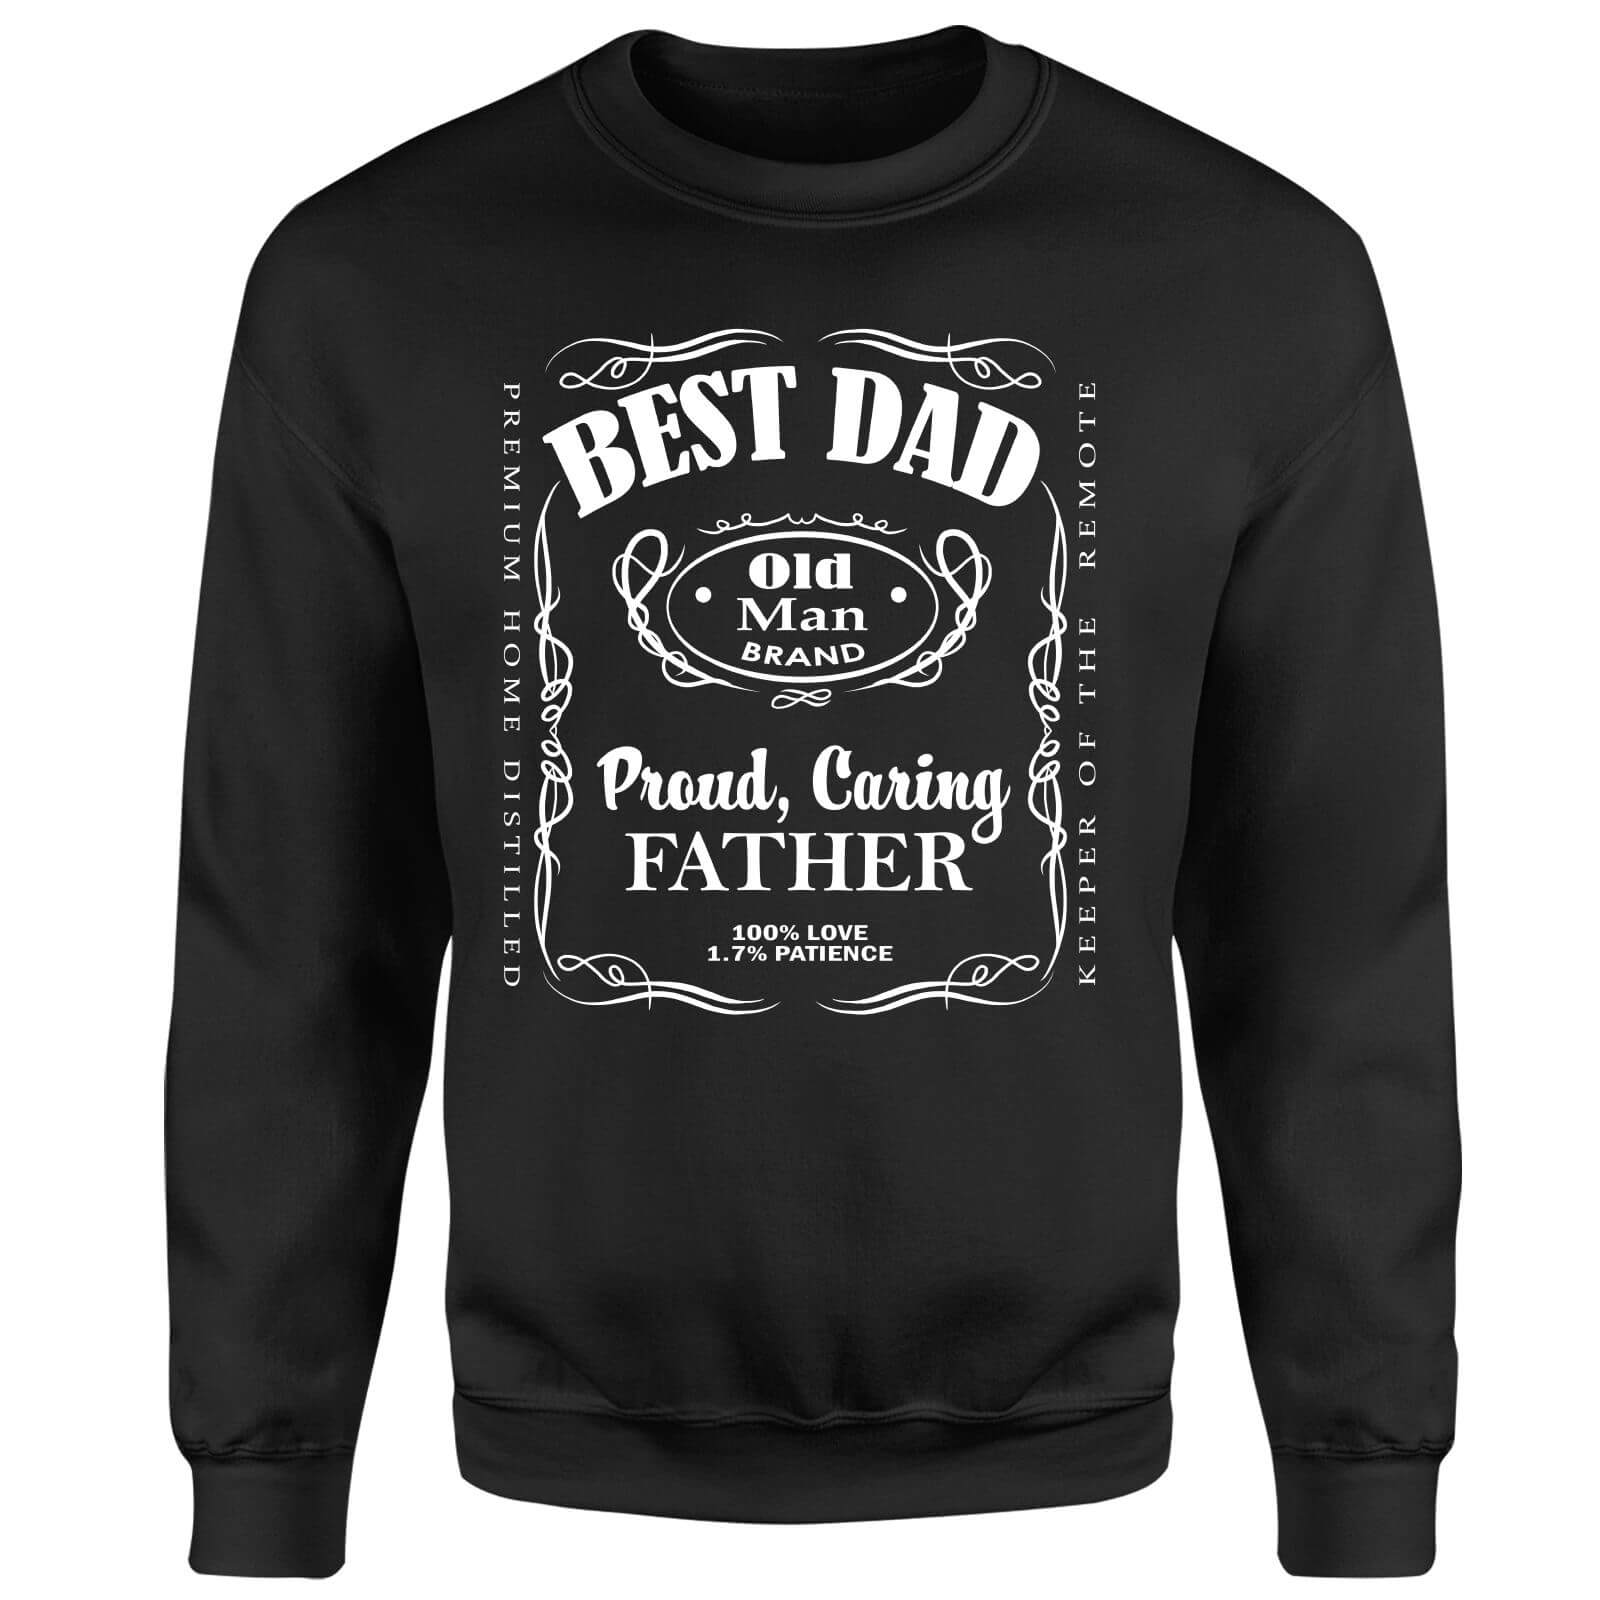 Best Dad Whiskey Label Sweatshirt - Black - 5Xl - Black